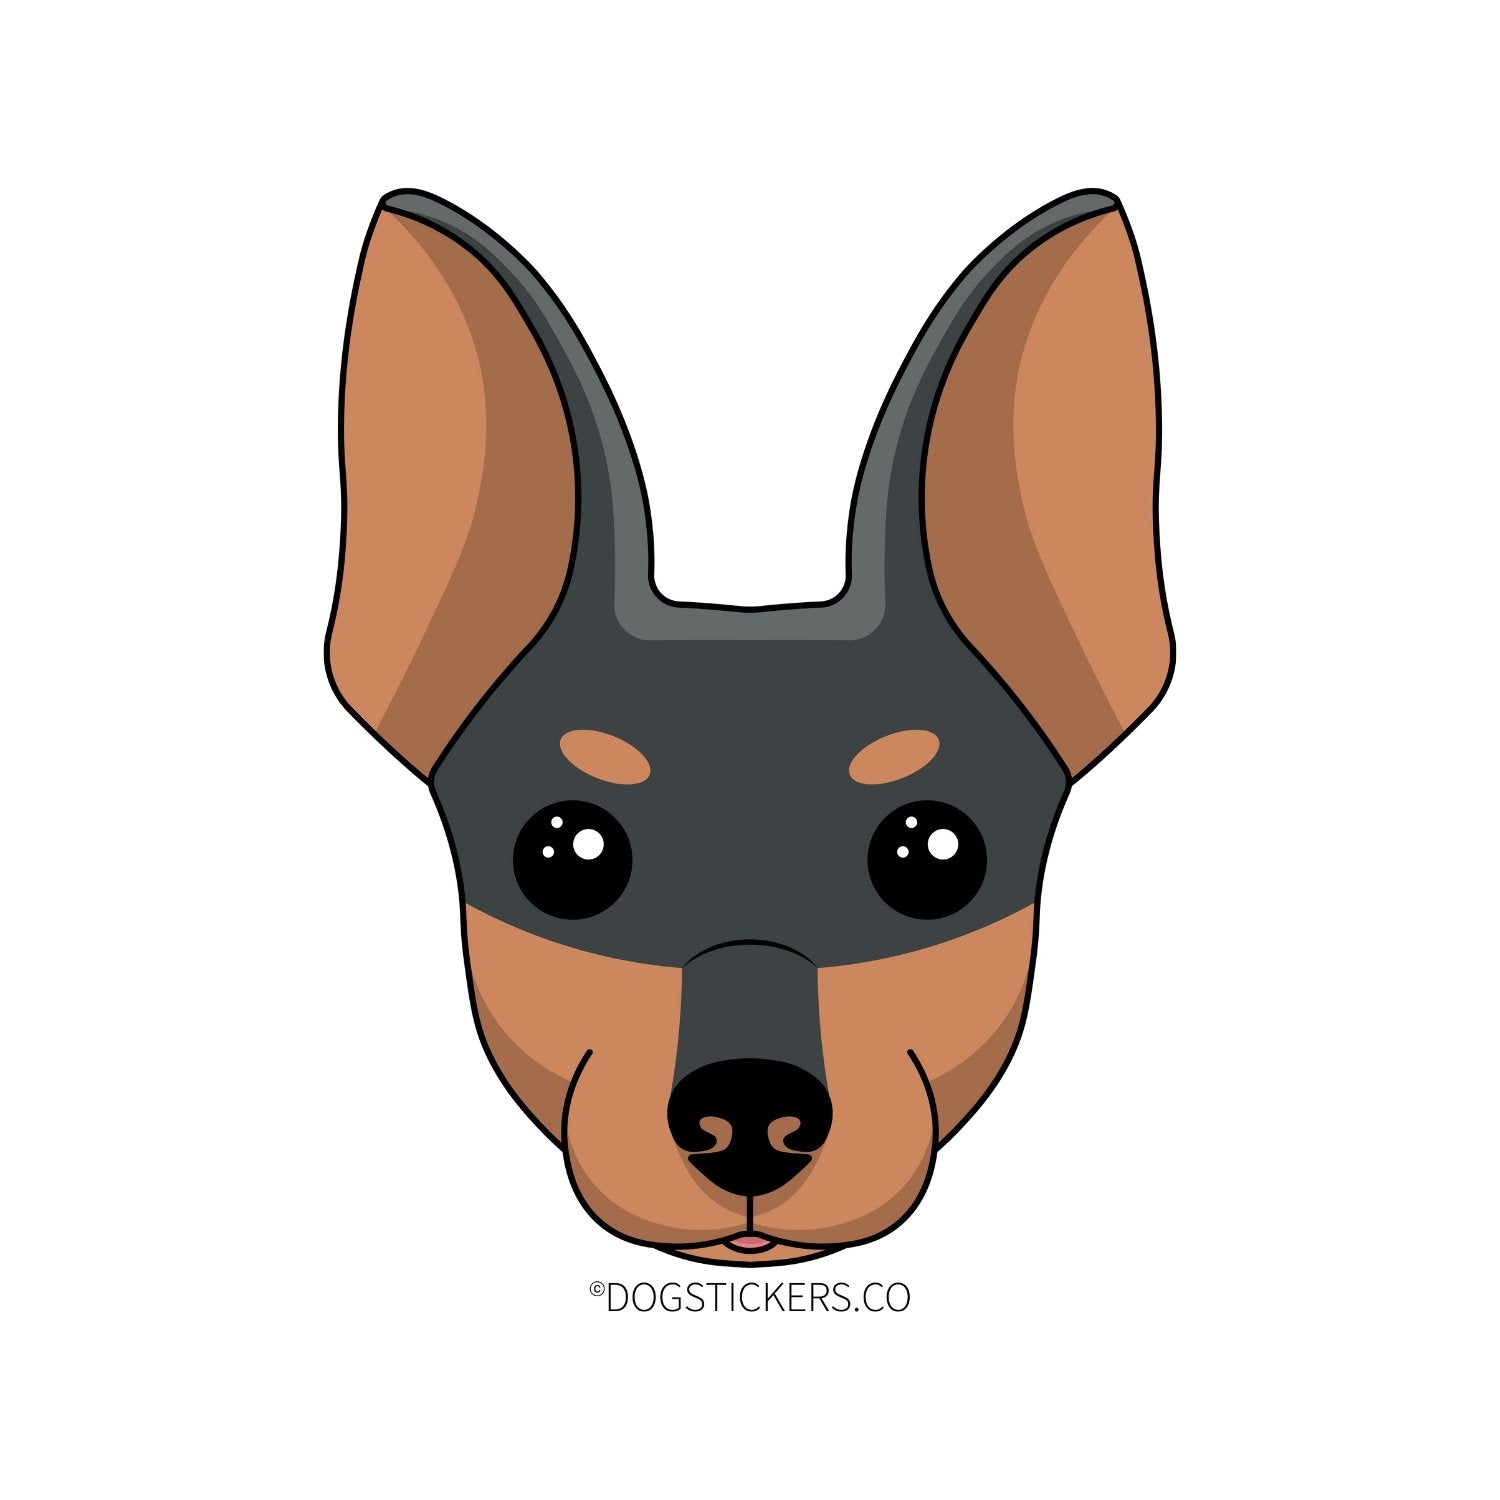 Rat Terrier - Dogstickers.co